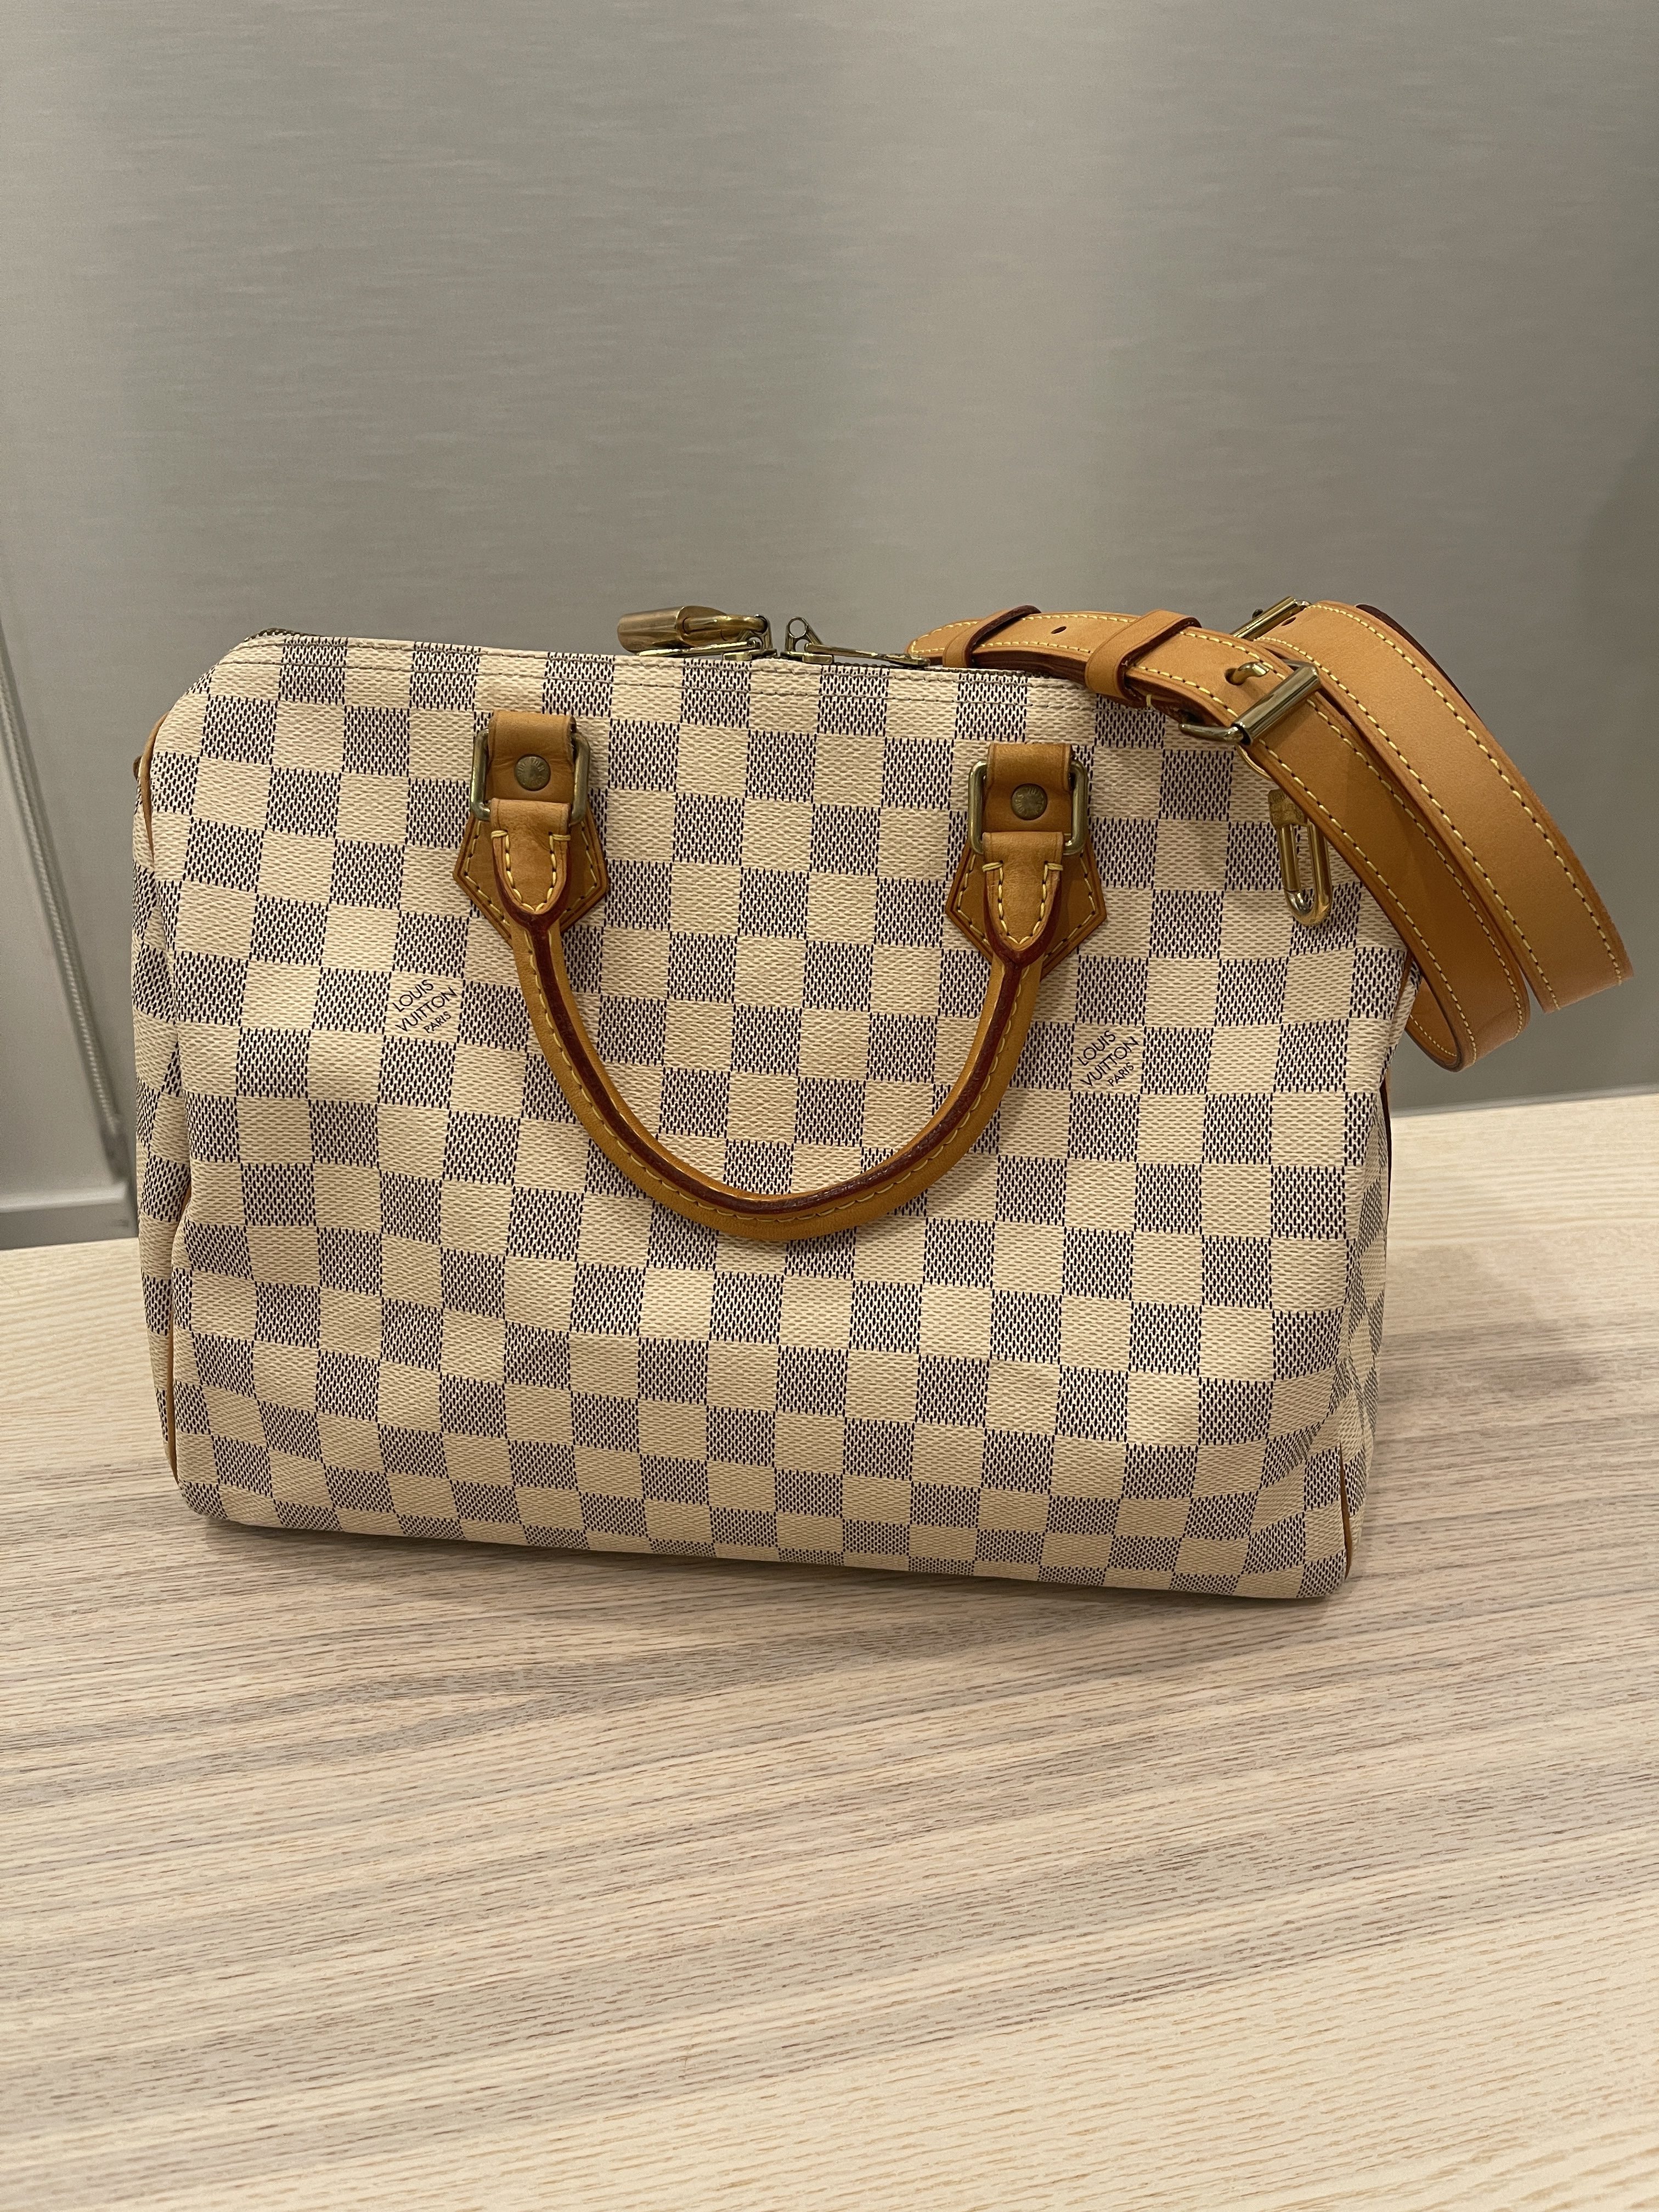 Louis Vuitton Speedy Bandoulière 30 in Damier Azur & Handbag Liner - SOLD